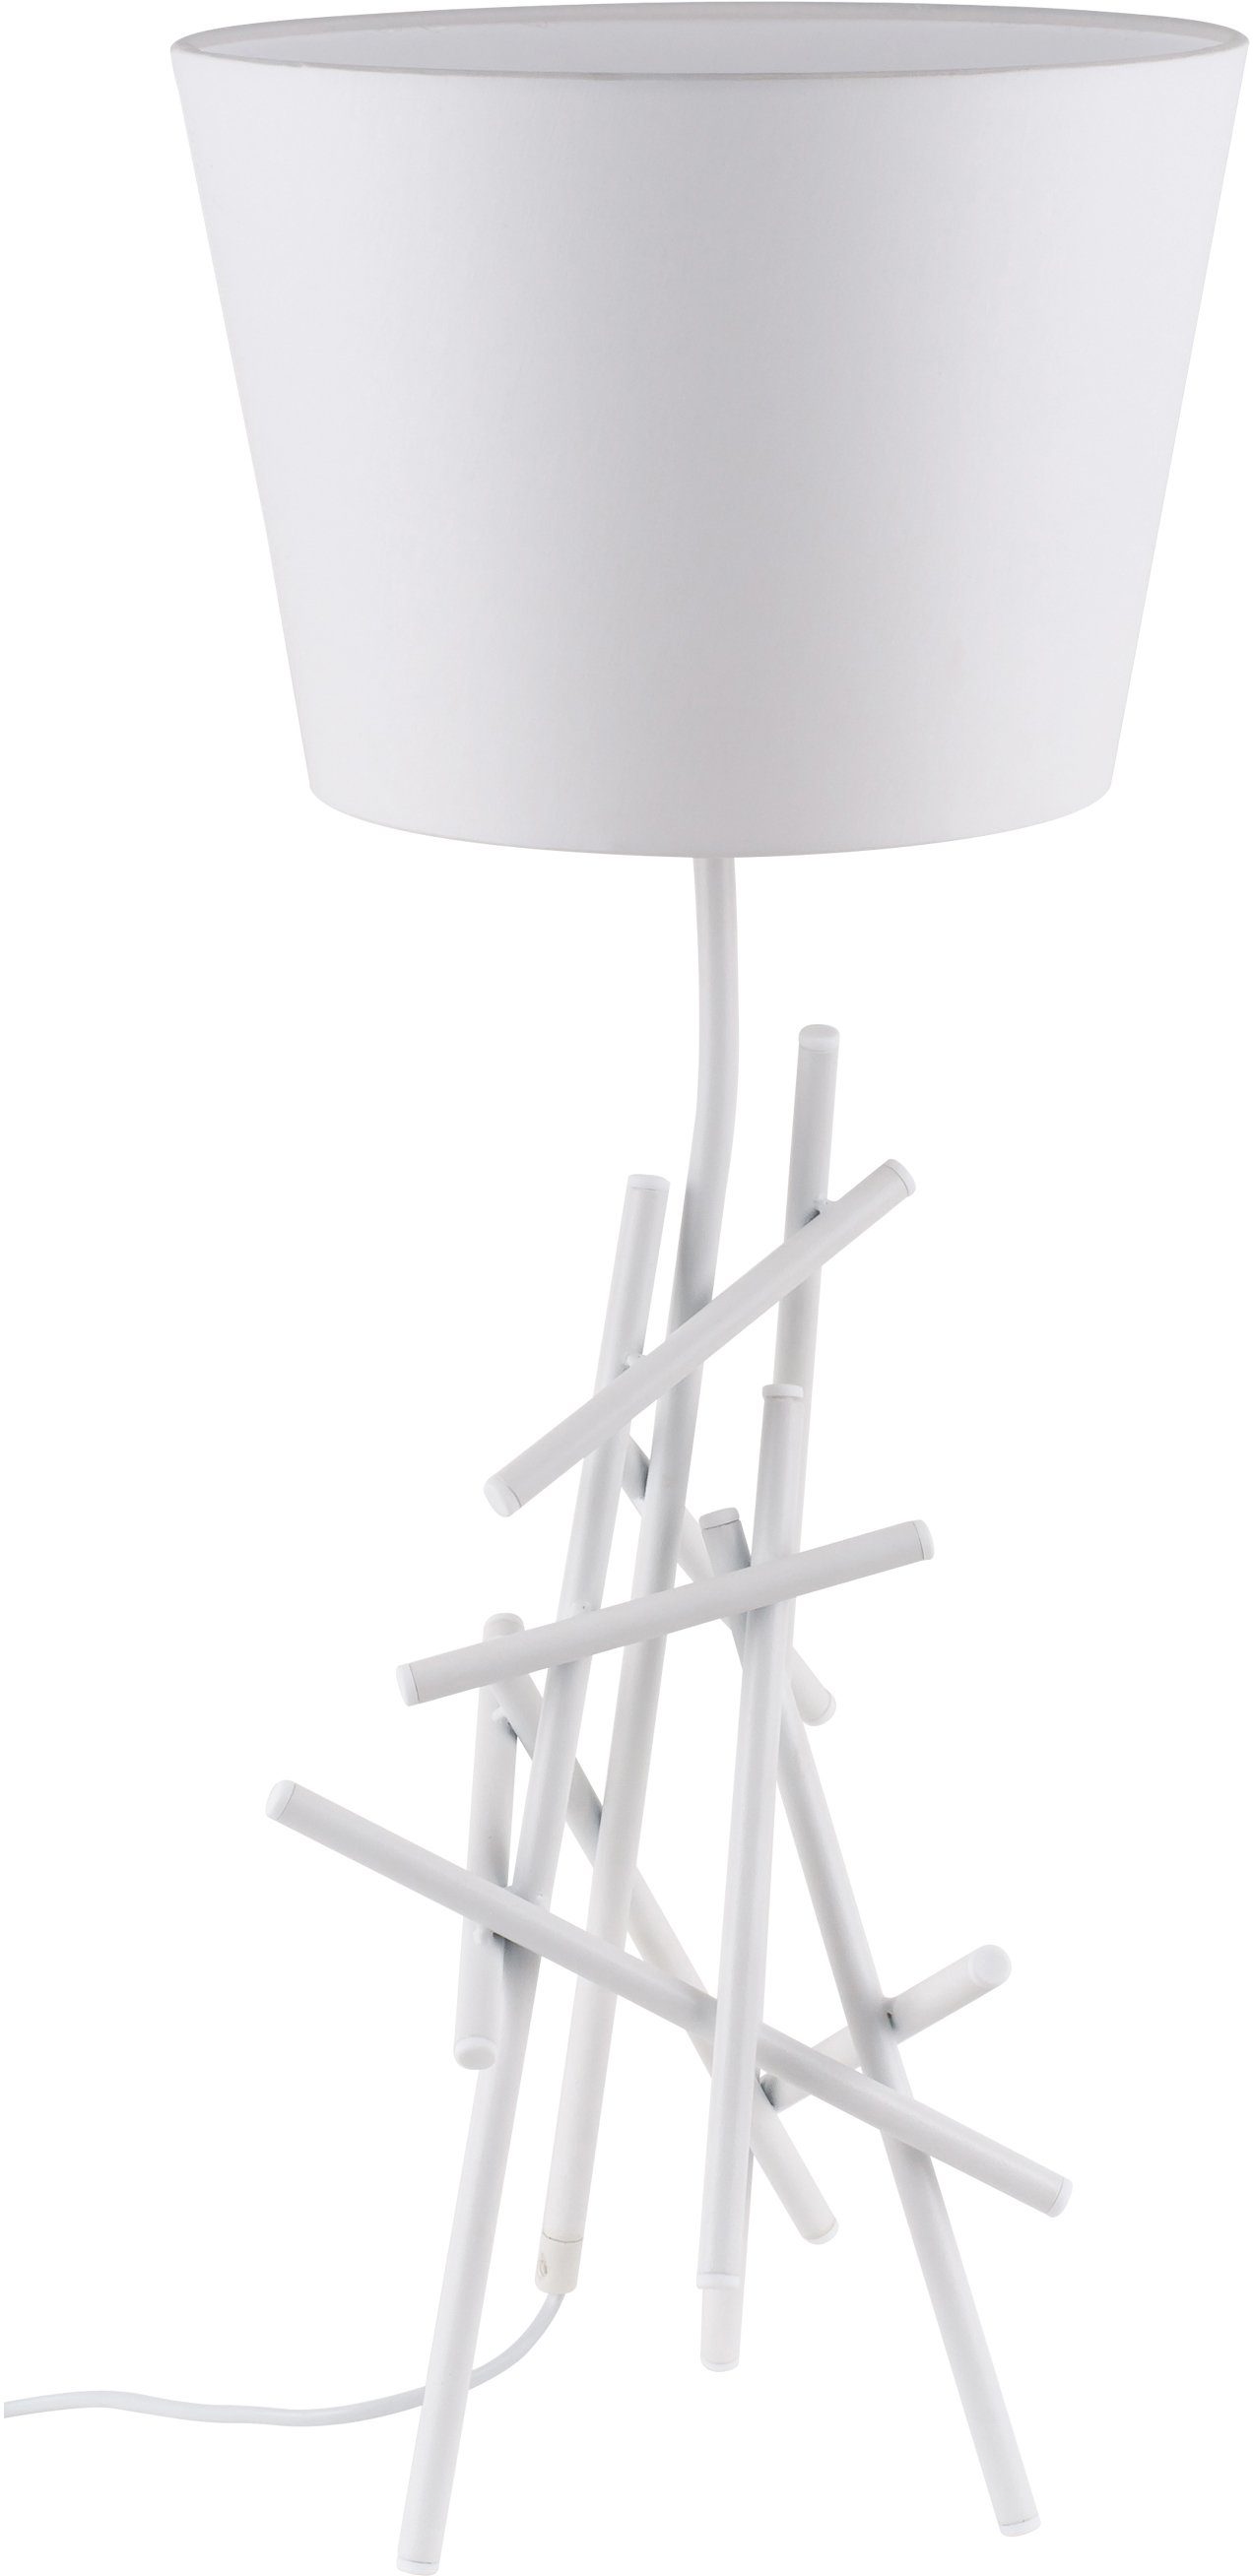 SPOT Light Tafellamp GLENN van metaal, met flexibele stoffen kap, origineel design, bijpassende lm e27, made in eu